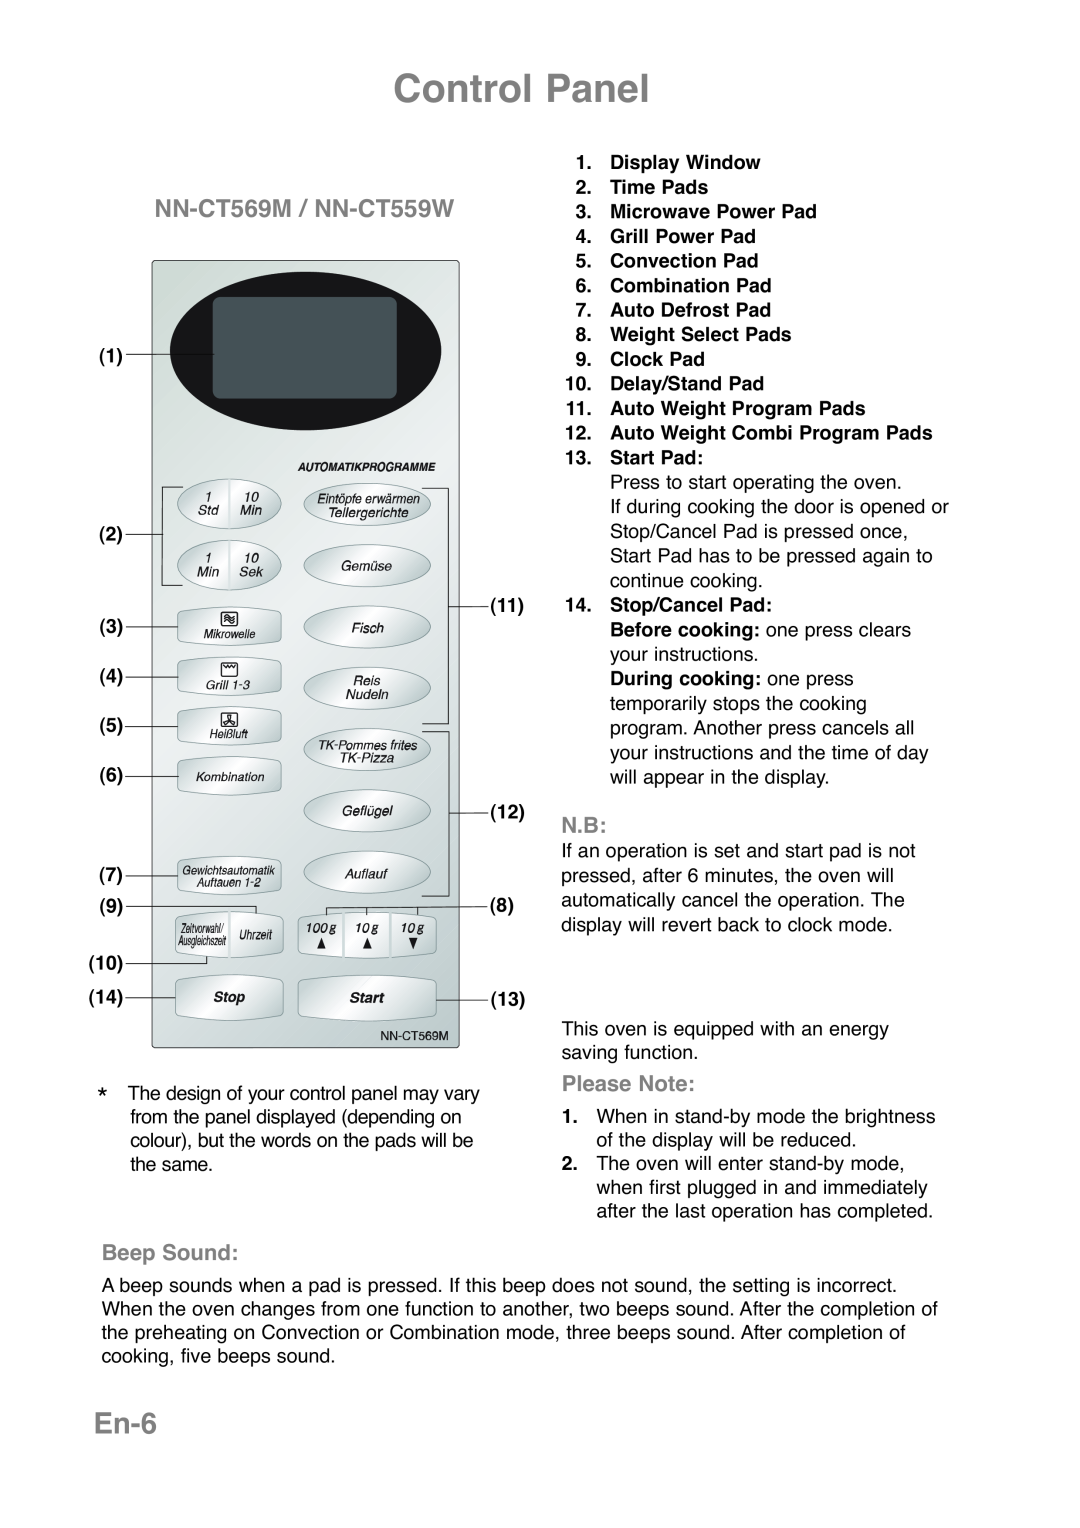 Panasonic Control Panel, En-6, NN-CT569M / NN-CT559W, Please Note, Beep Sound, Display Window, Time Pads, Clock Pad 